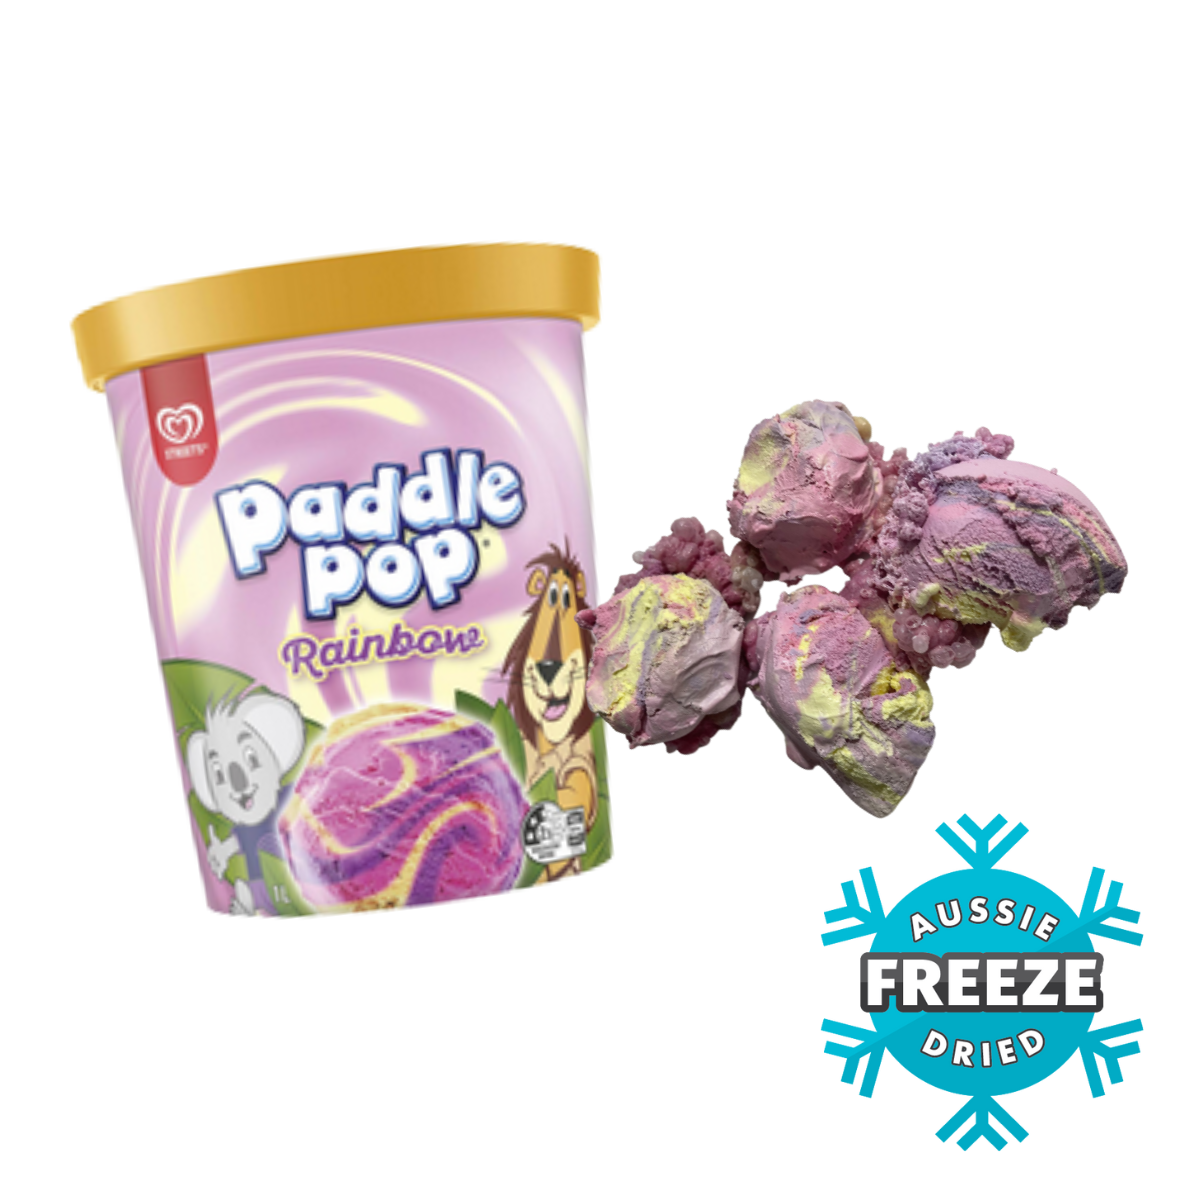 freeze dried rainbow paddlepop ice cream scoops